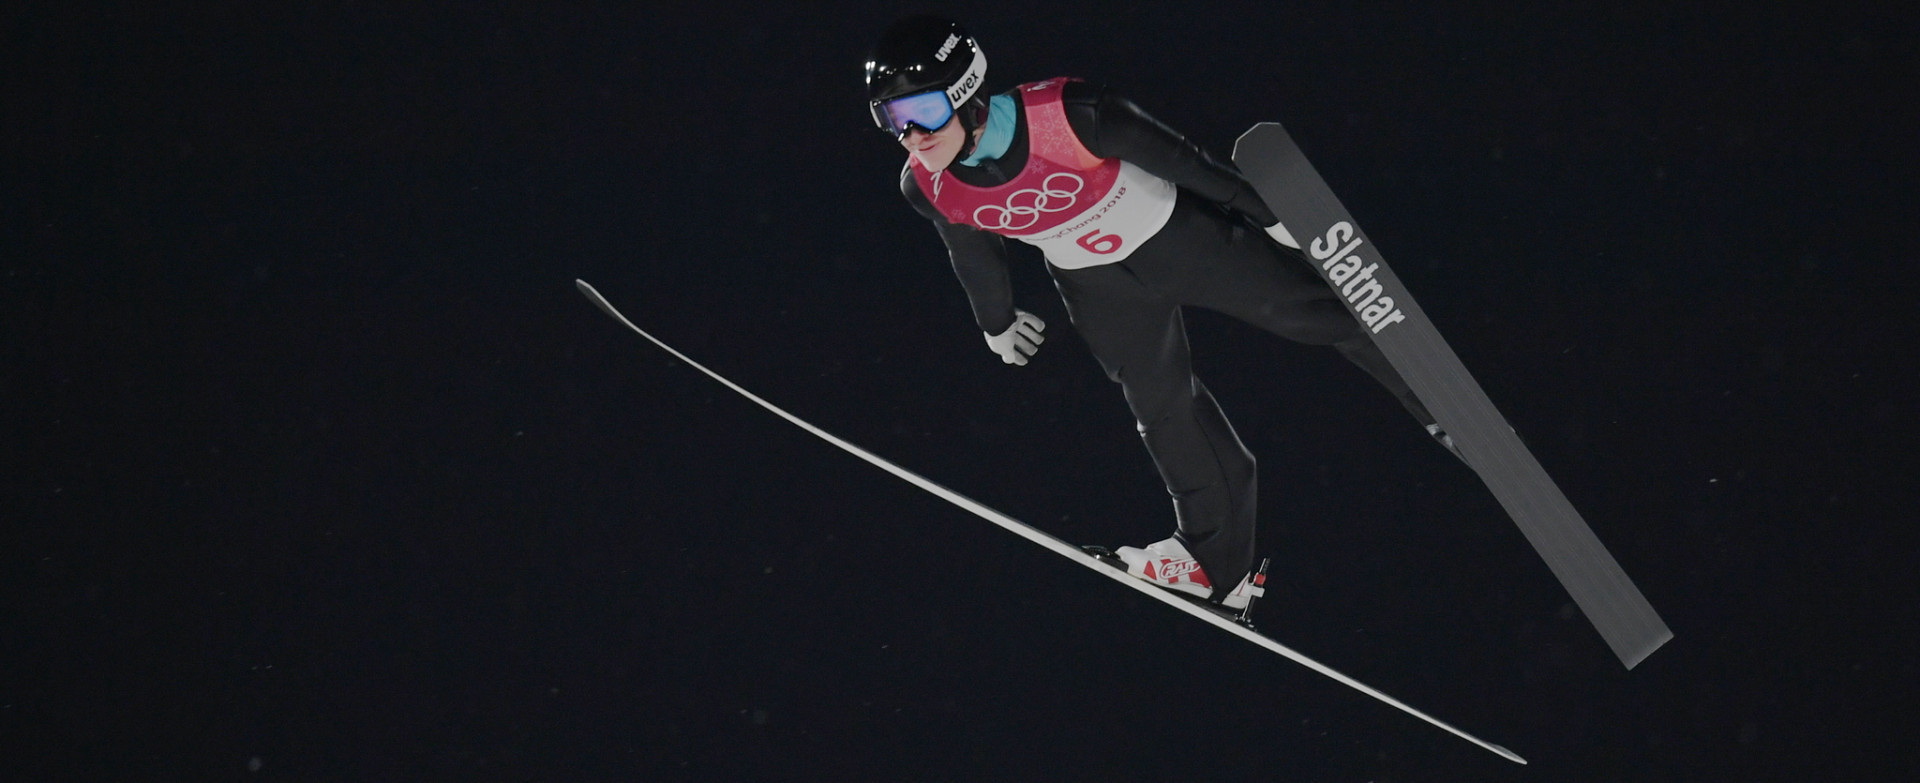 Казахстанец занял 41-е место на этапе Кубка мира по прыжкам на лыжах с трамплина  